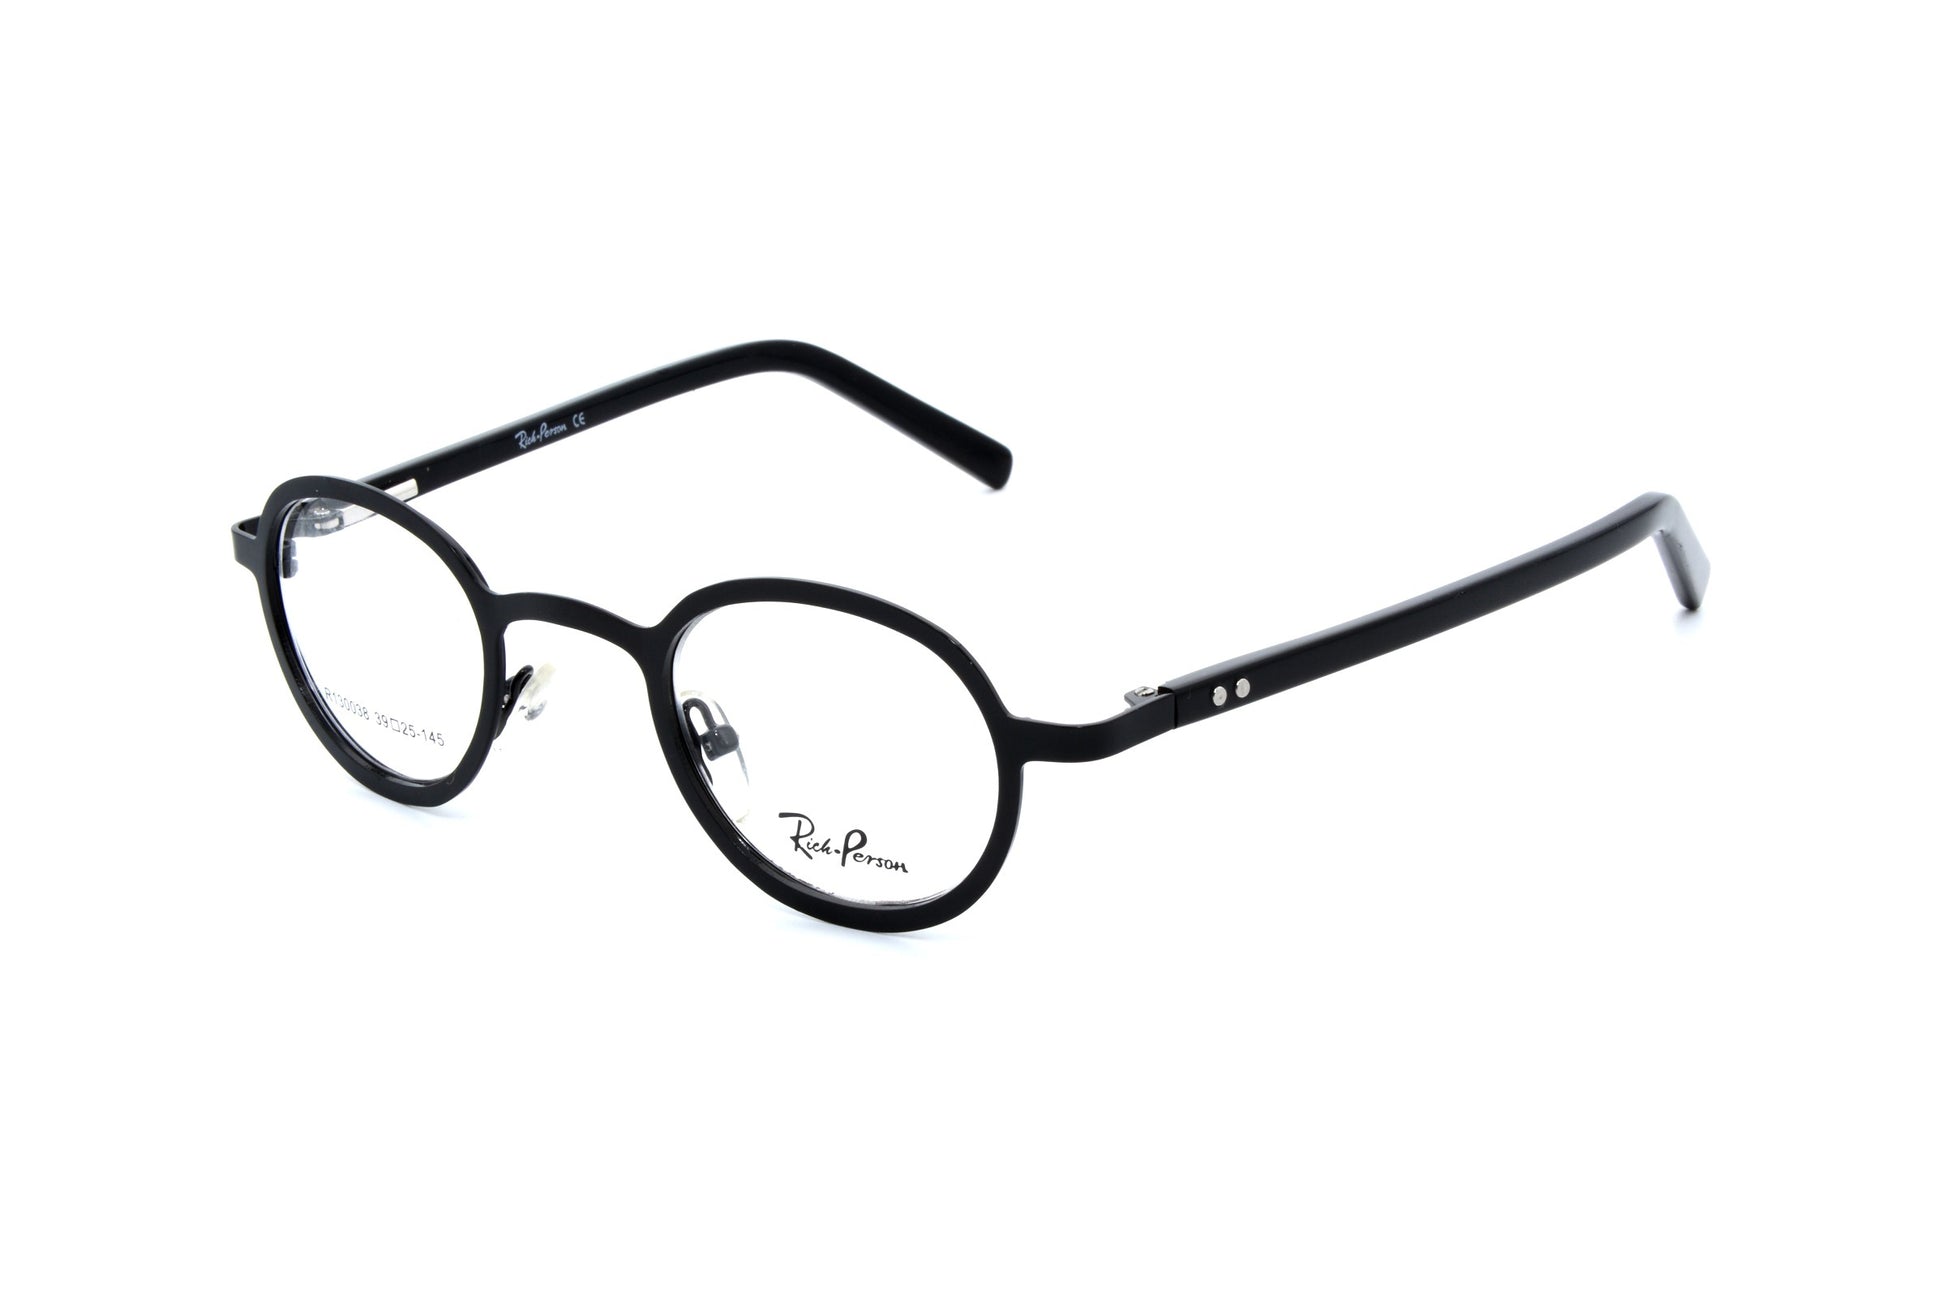 Rich person eyewear R130038, C1 - Optics Trading